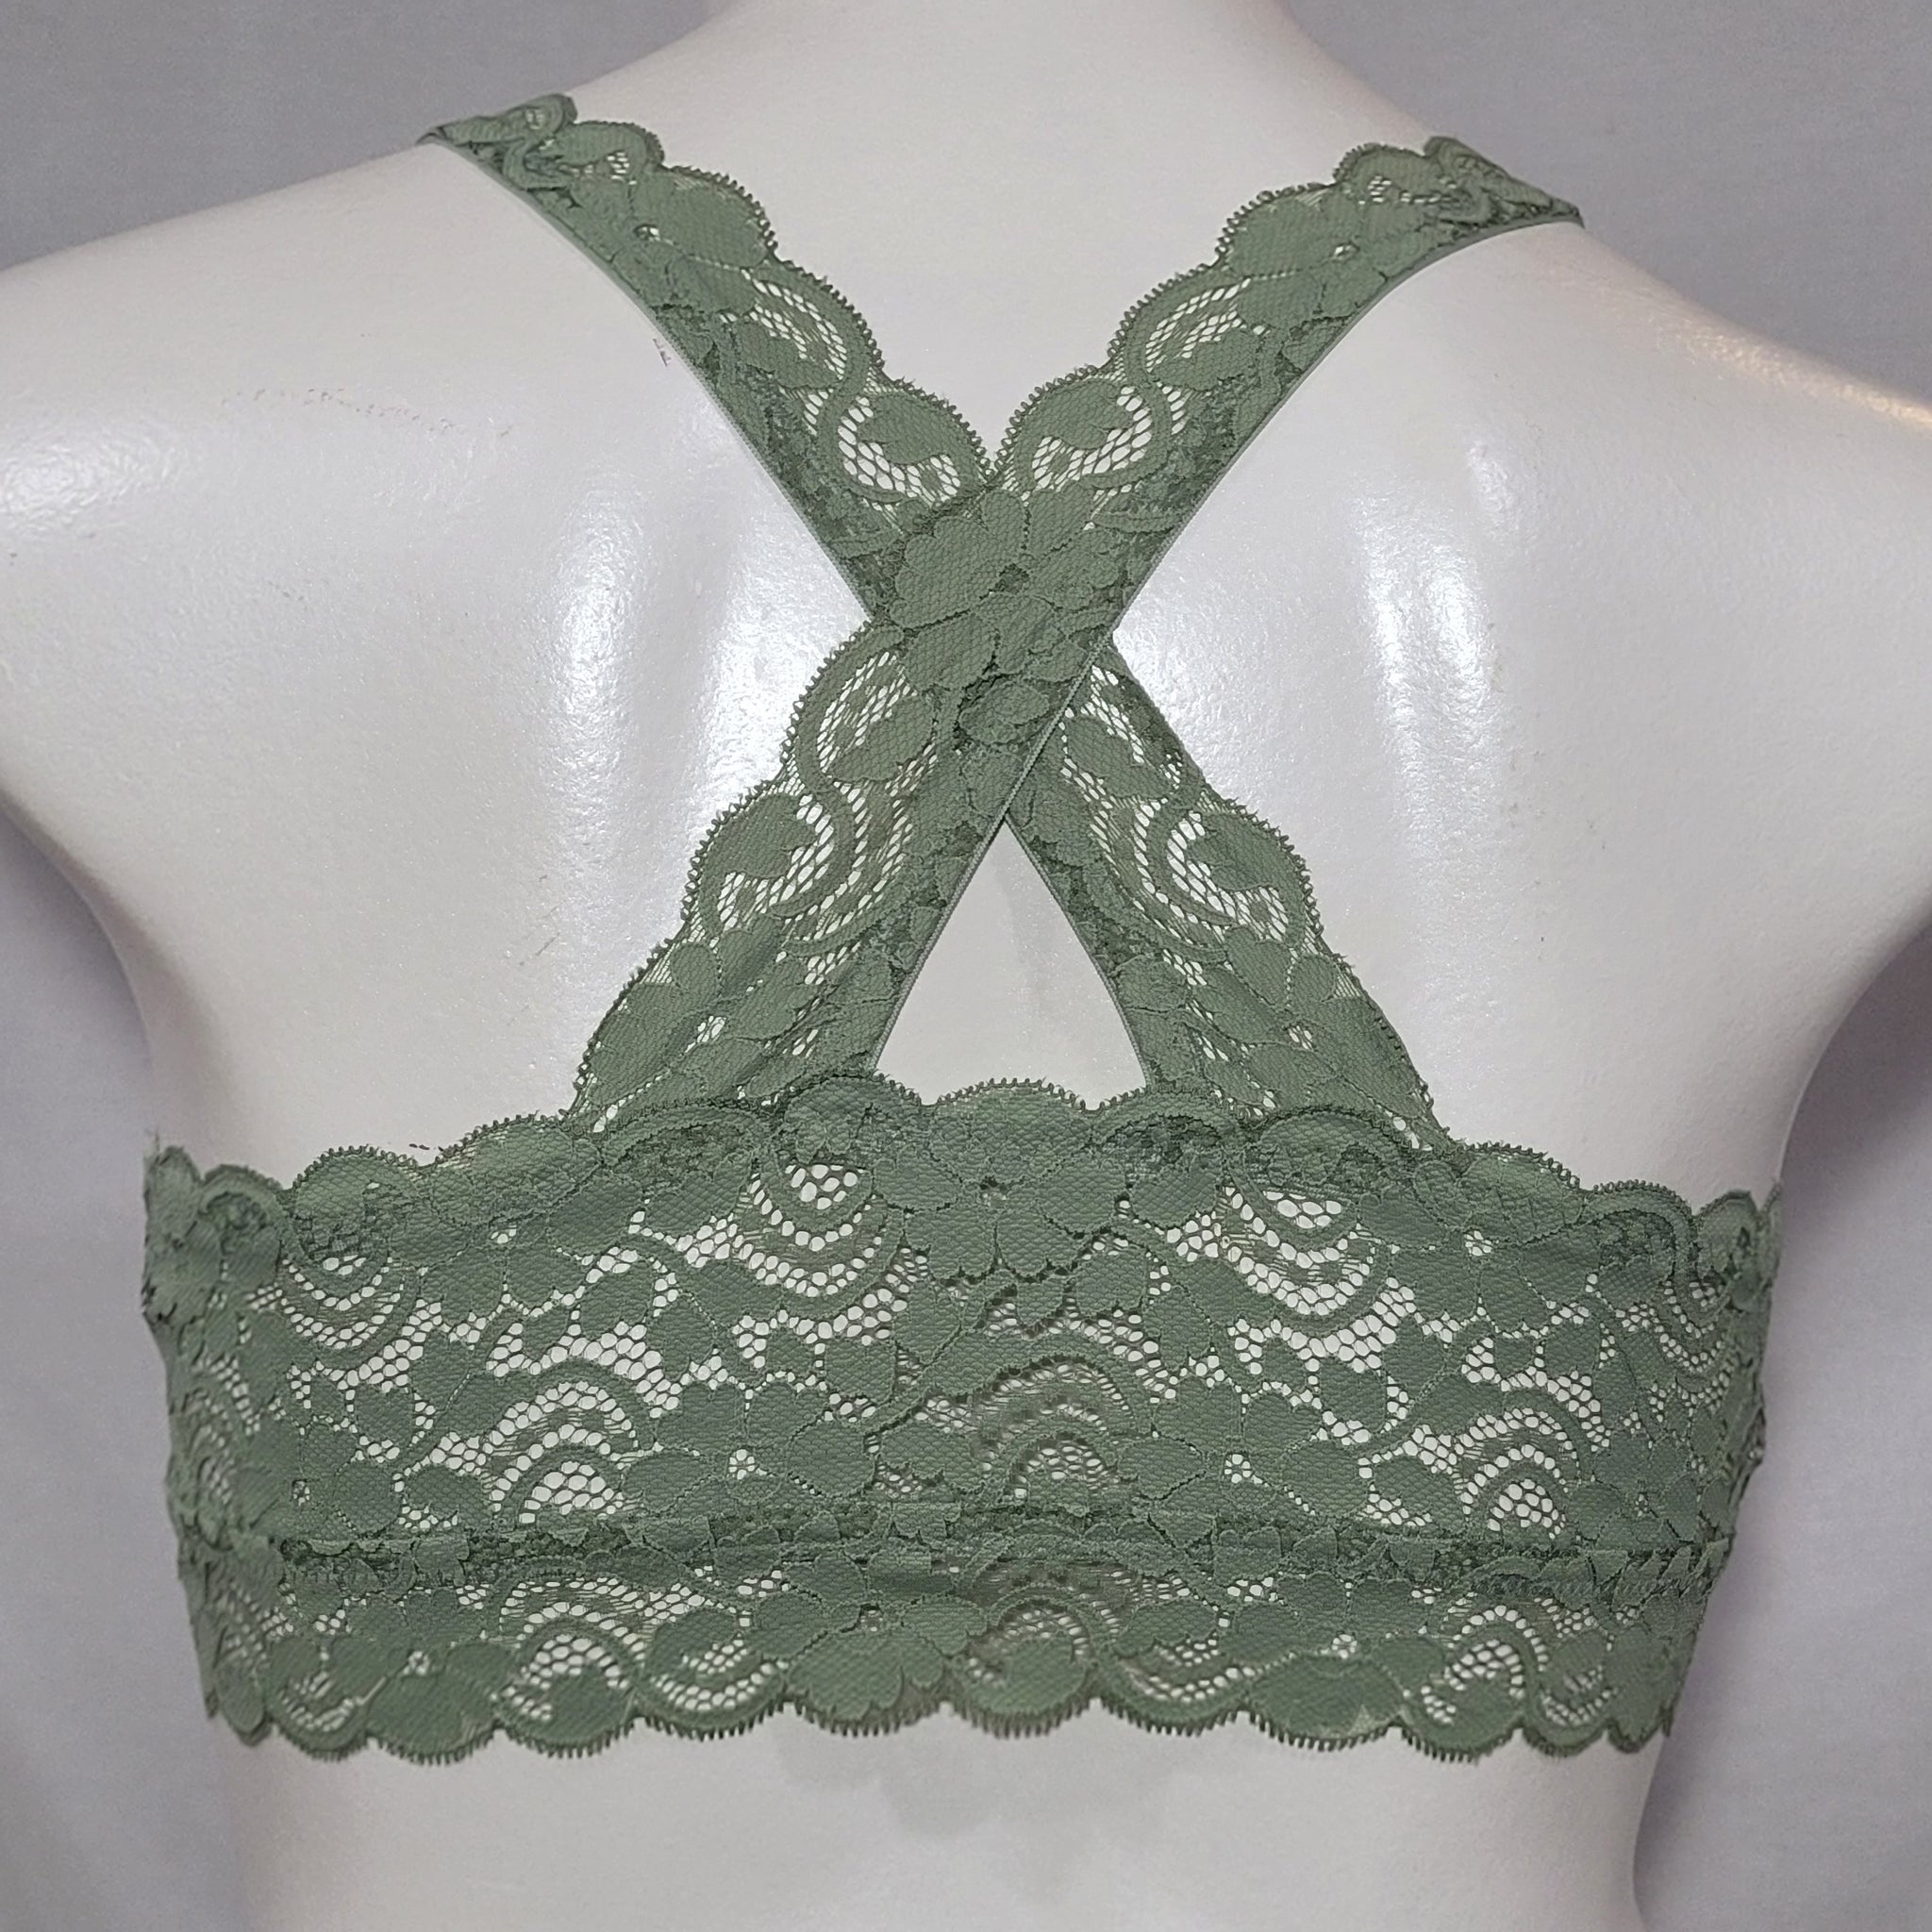 neon green lace bralette top from pretty little